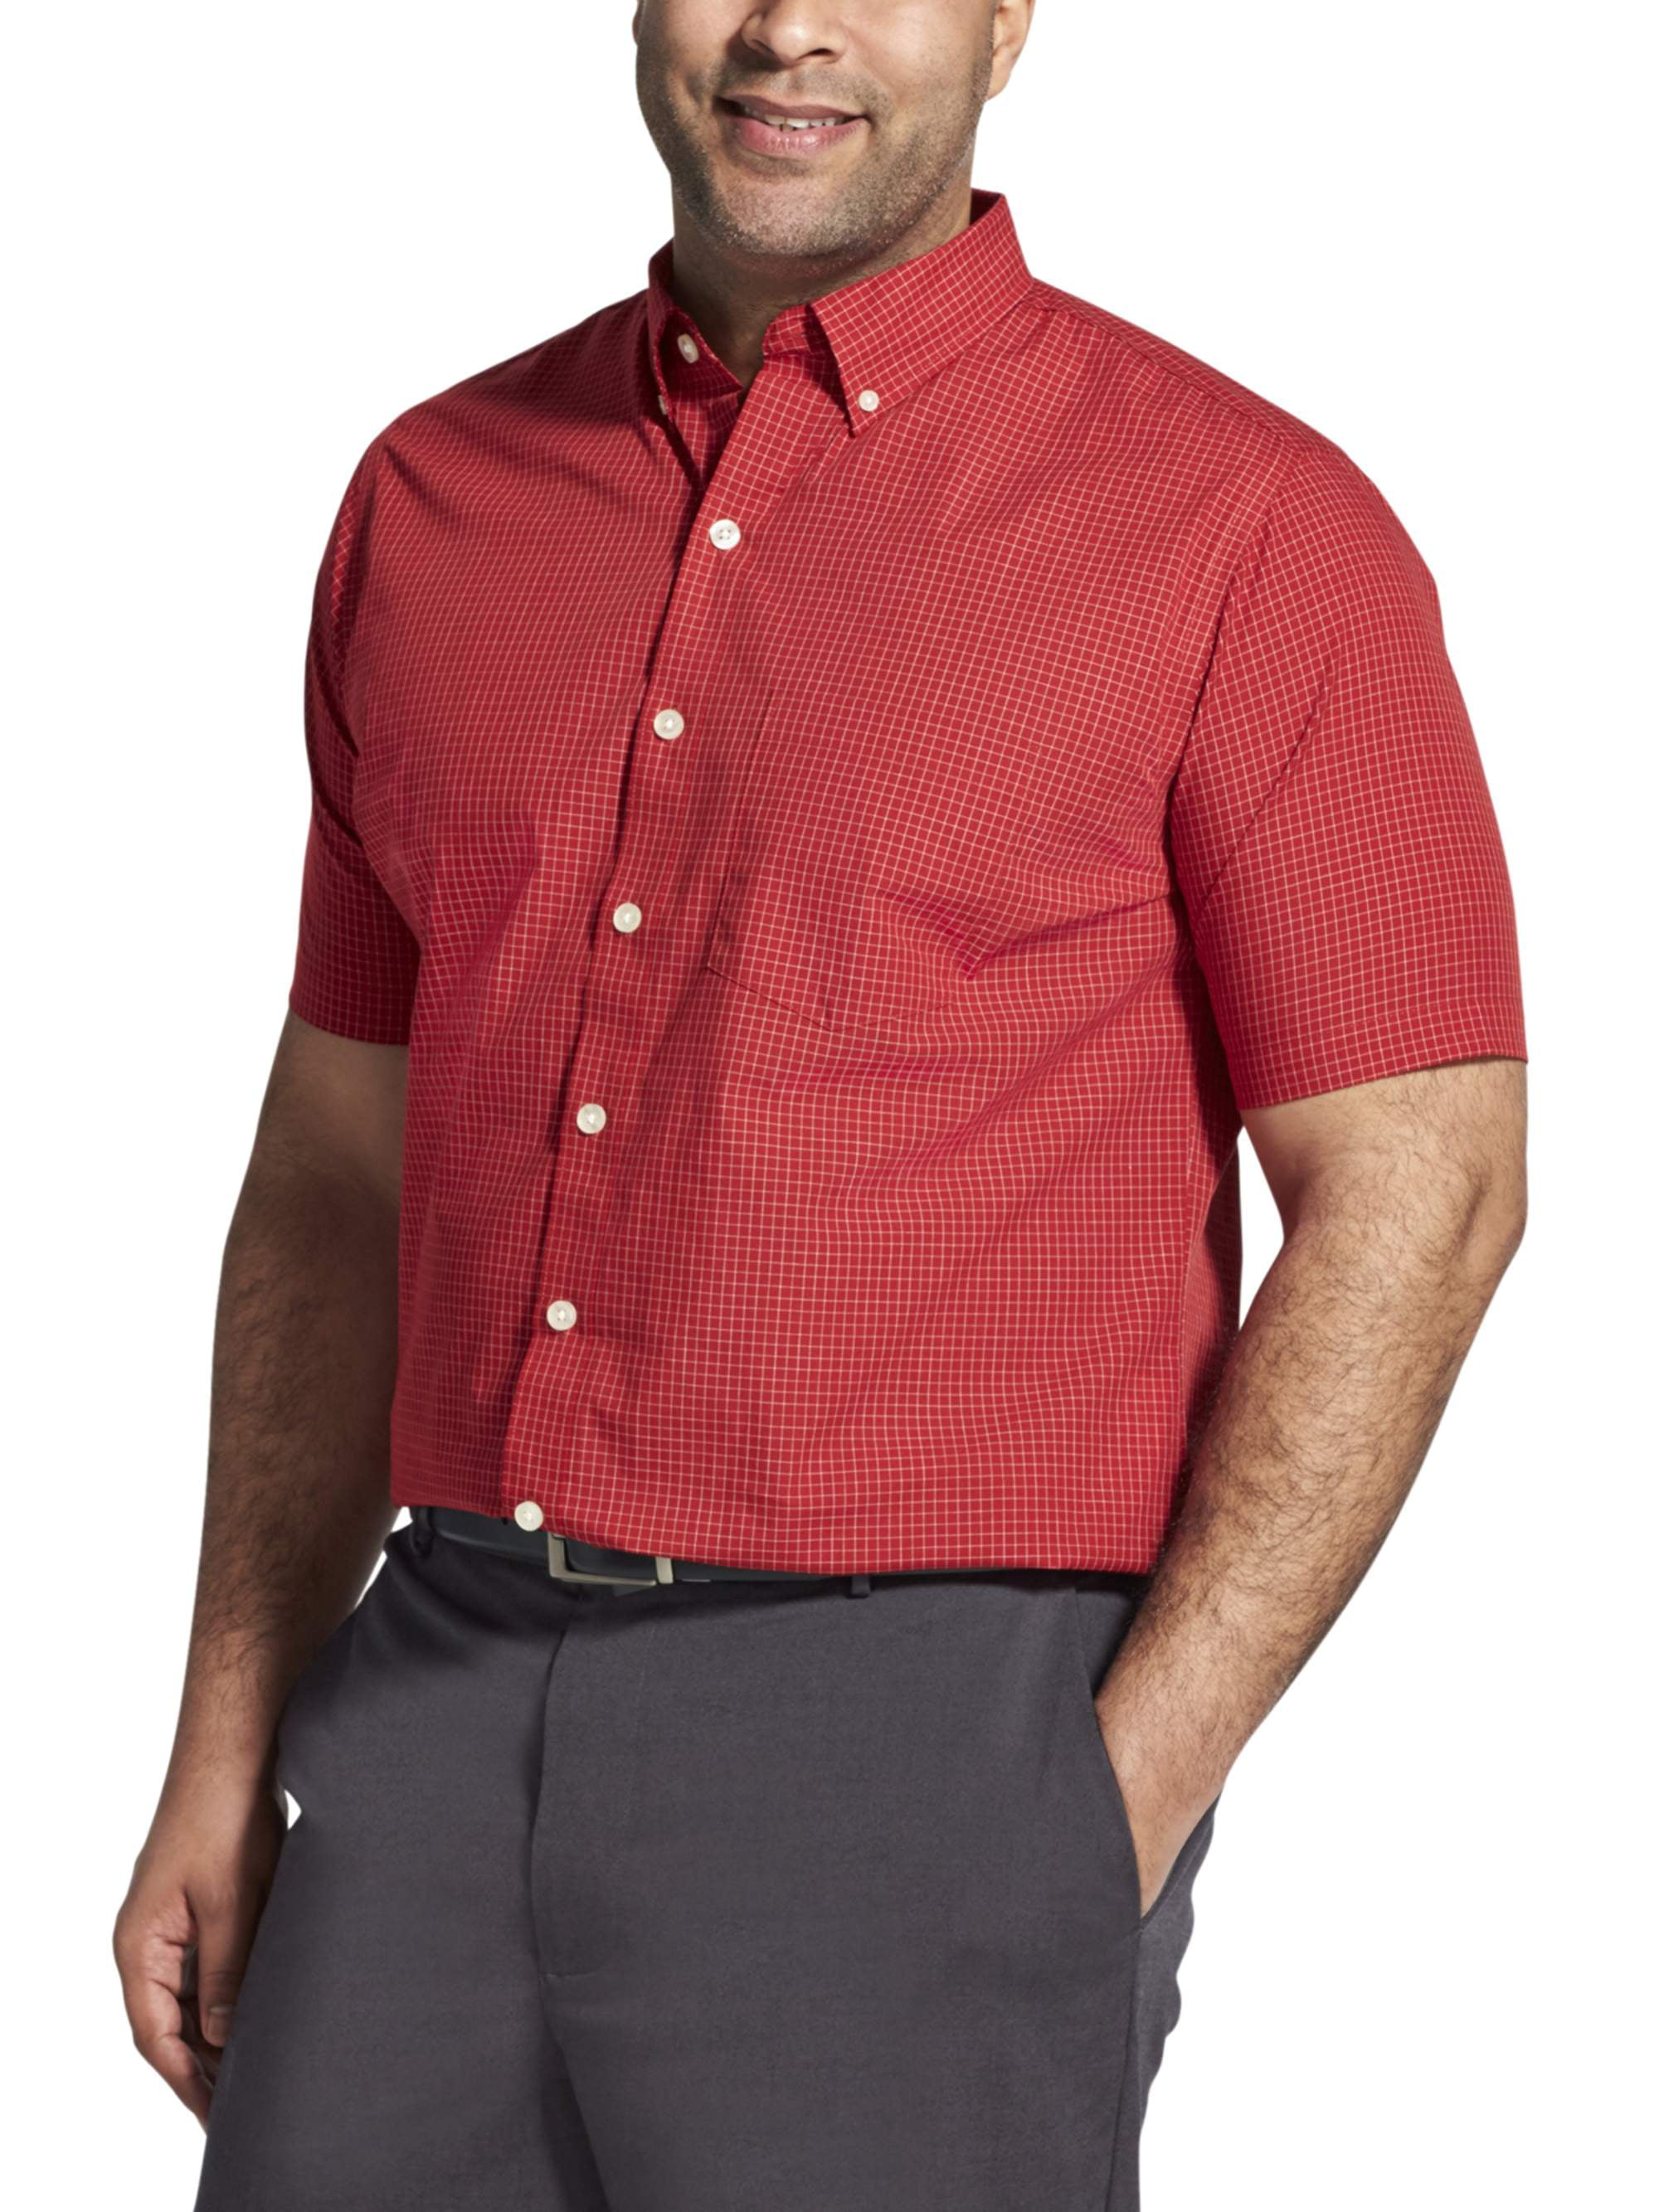 Van Heusen Men's Big and Tall Wrinkle Free Short Sleeve Shirt - Walmart.com